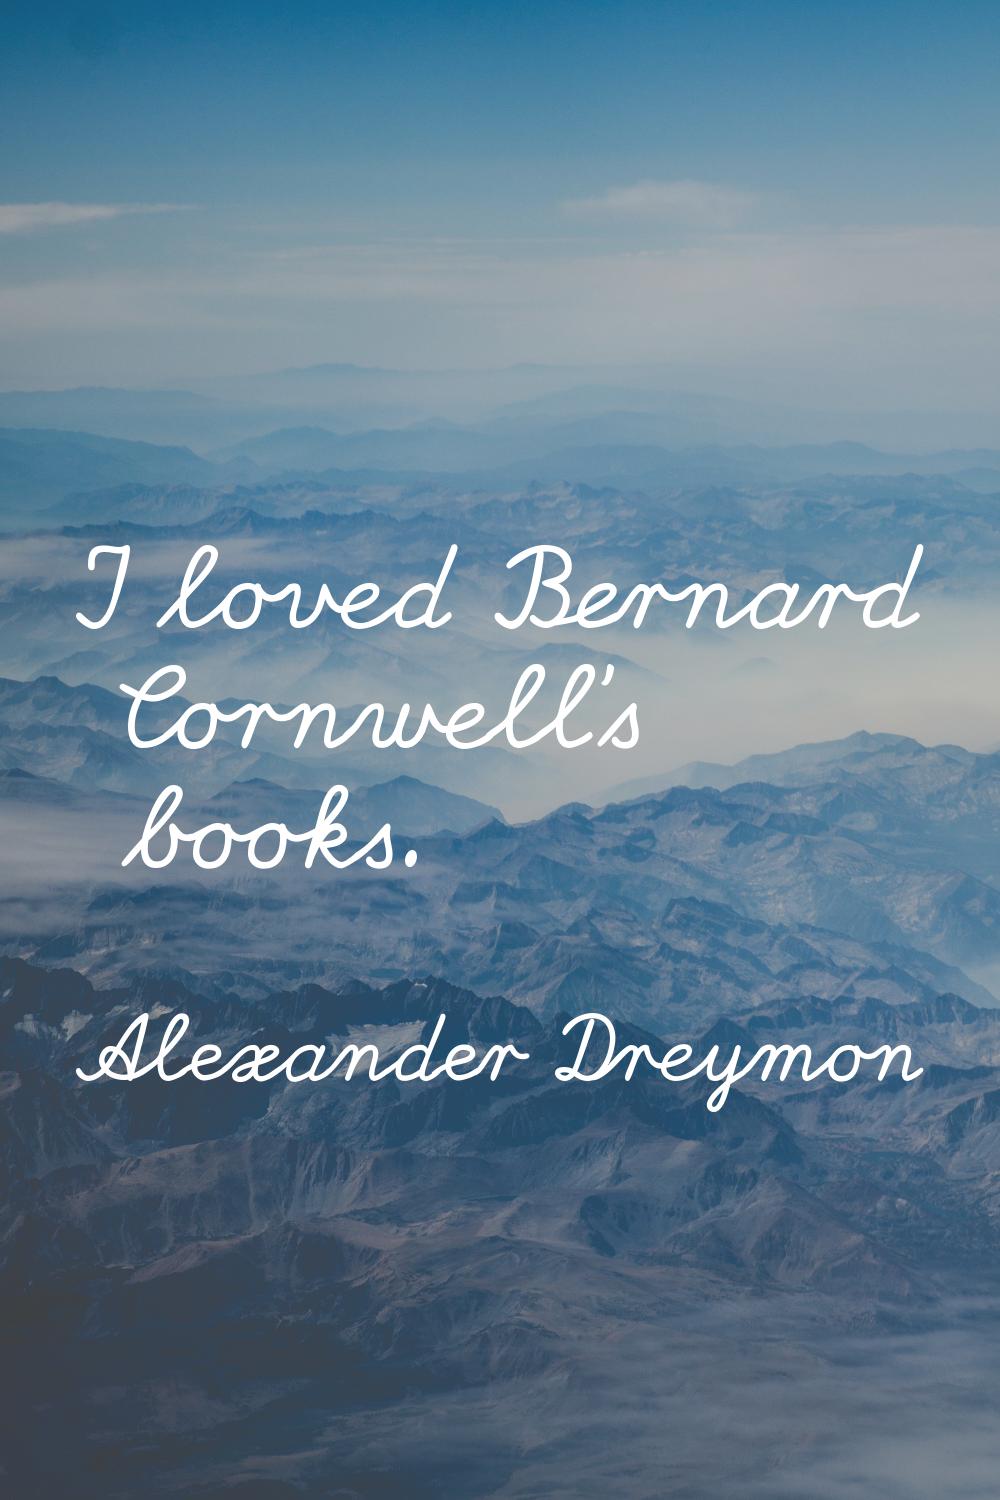 I loved Bernard Cornwell's books.